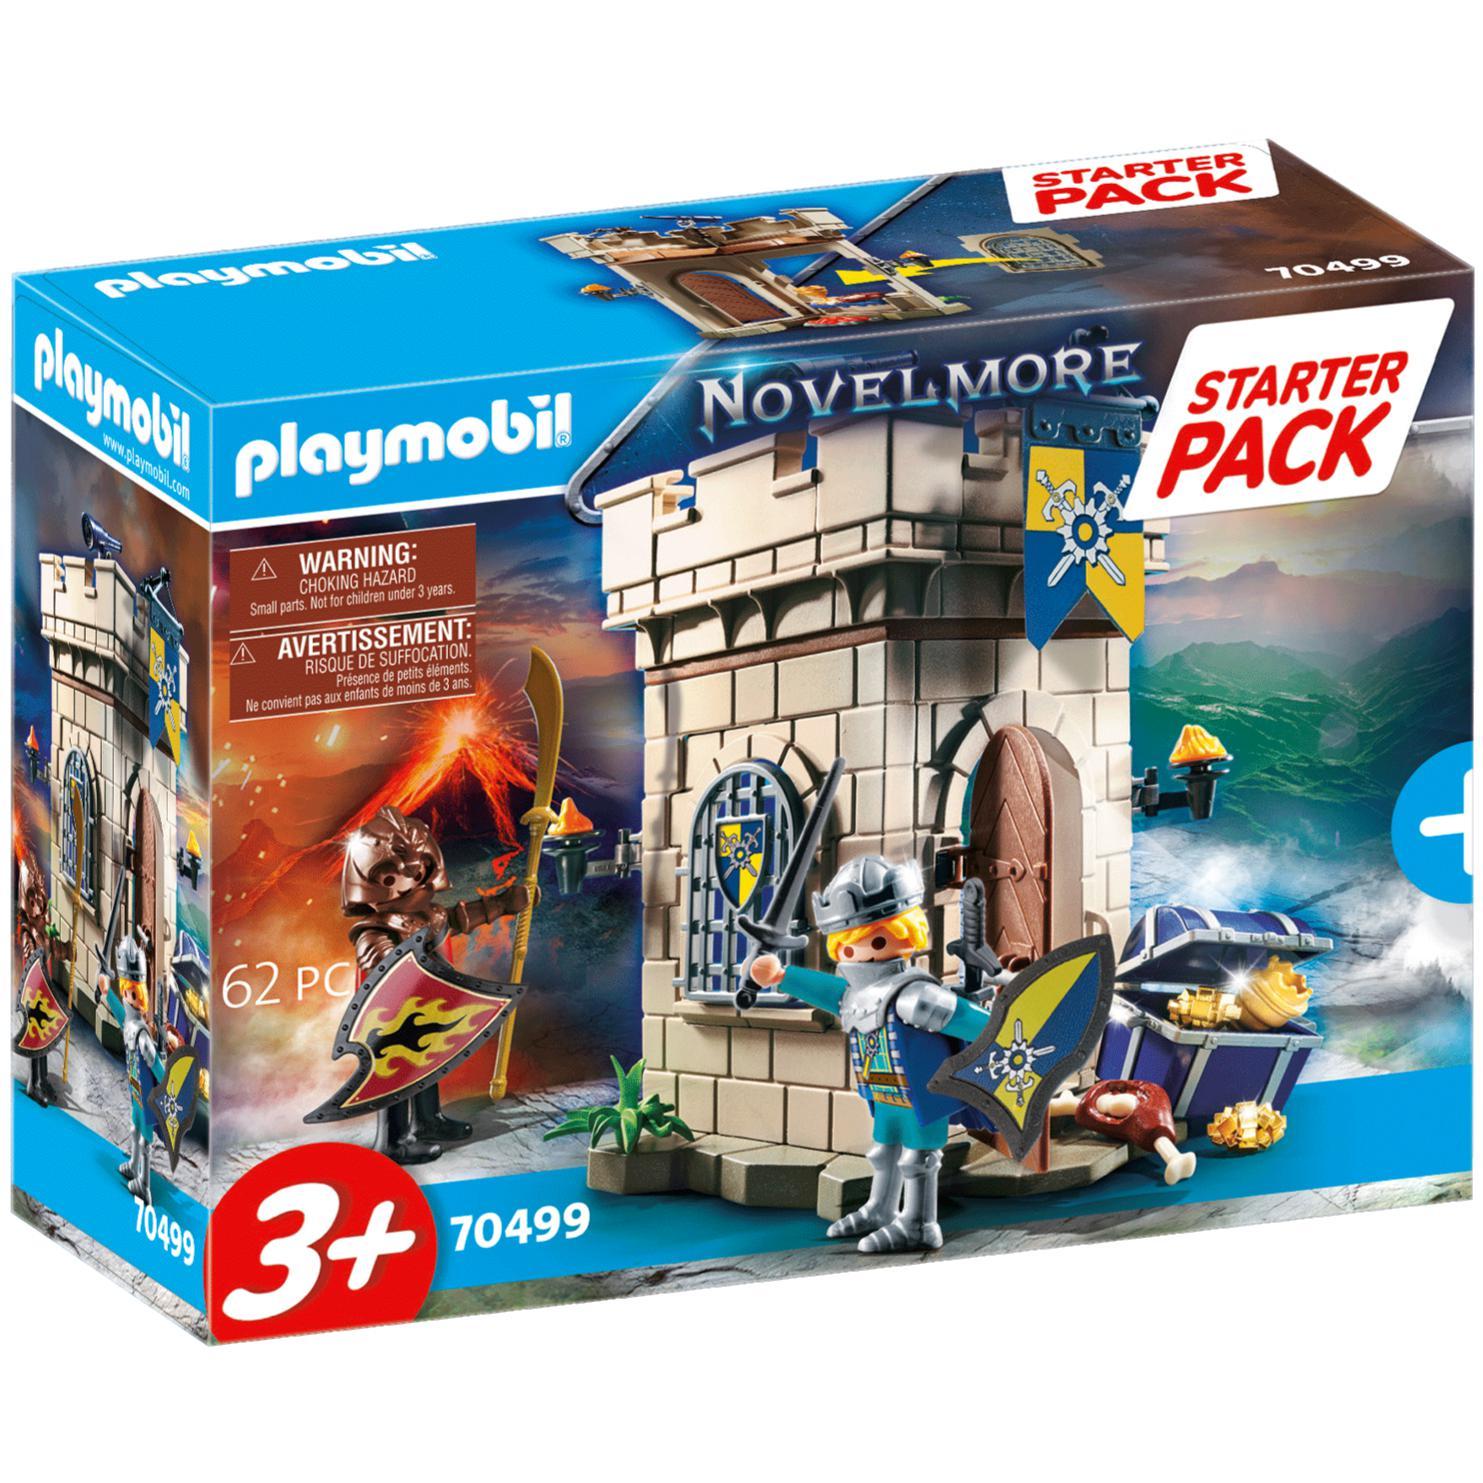 Playmobil Large Novelmore Knights Fortress Starter Pack